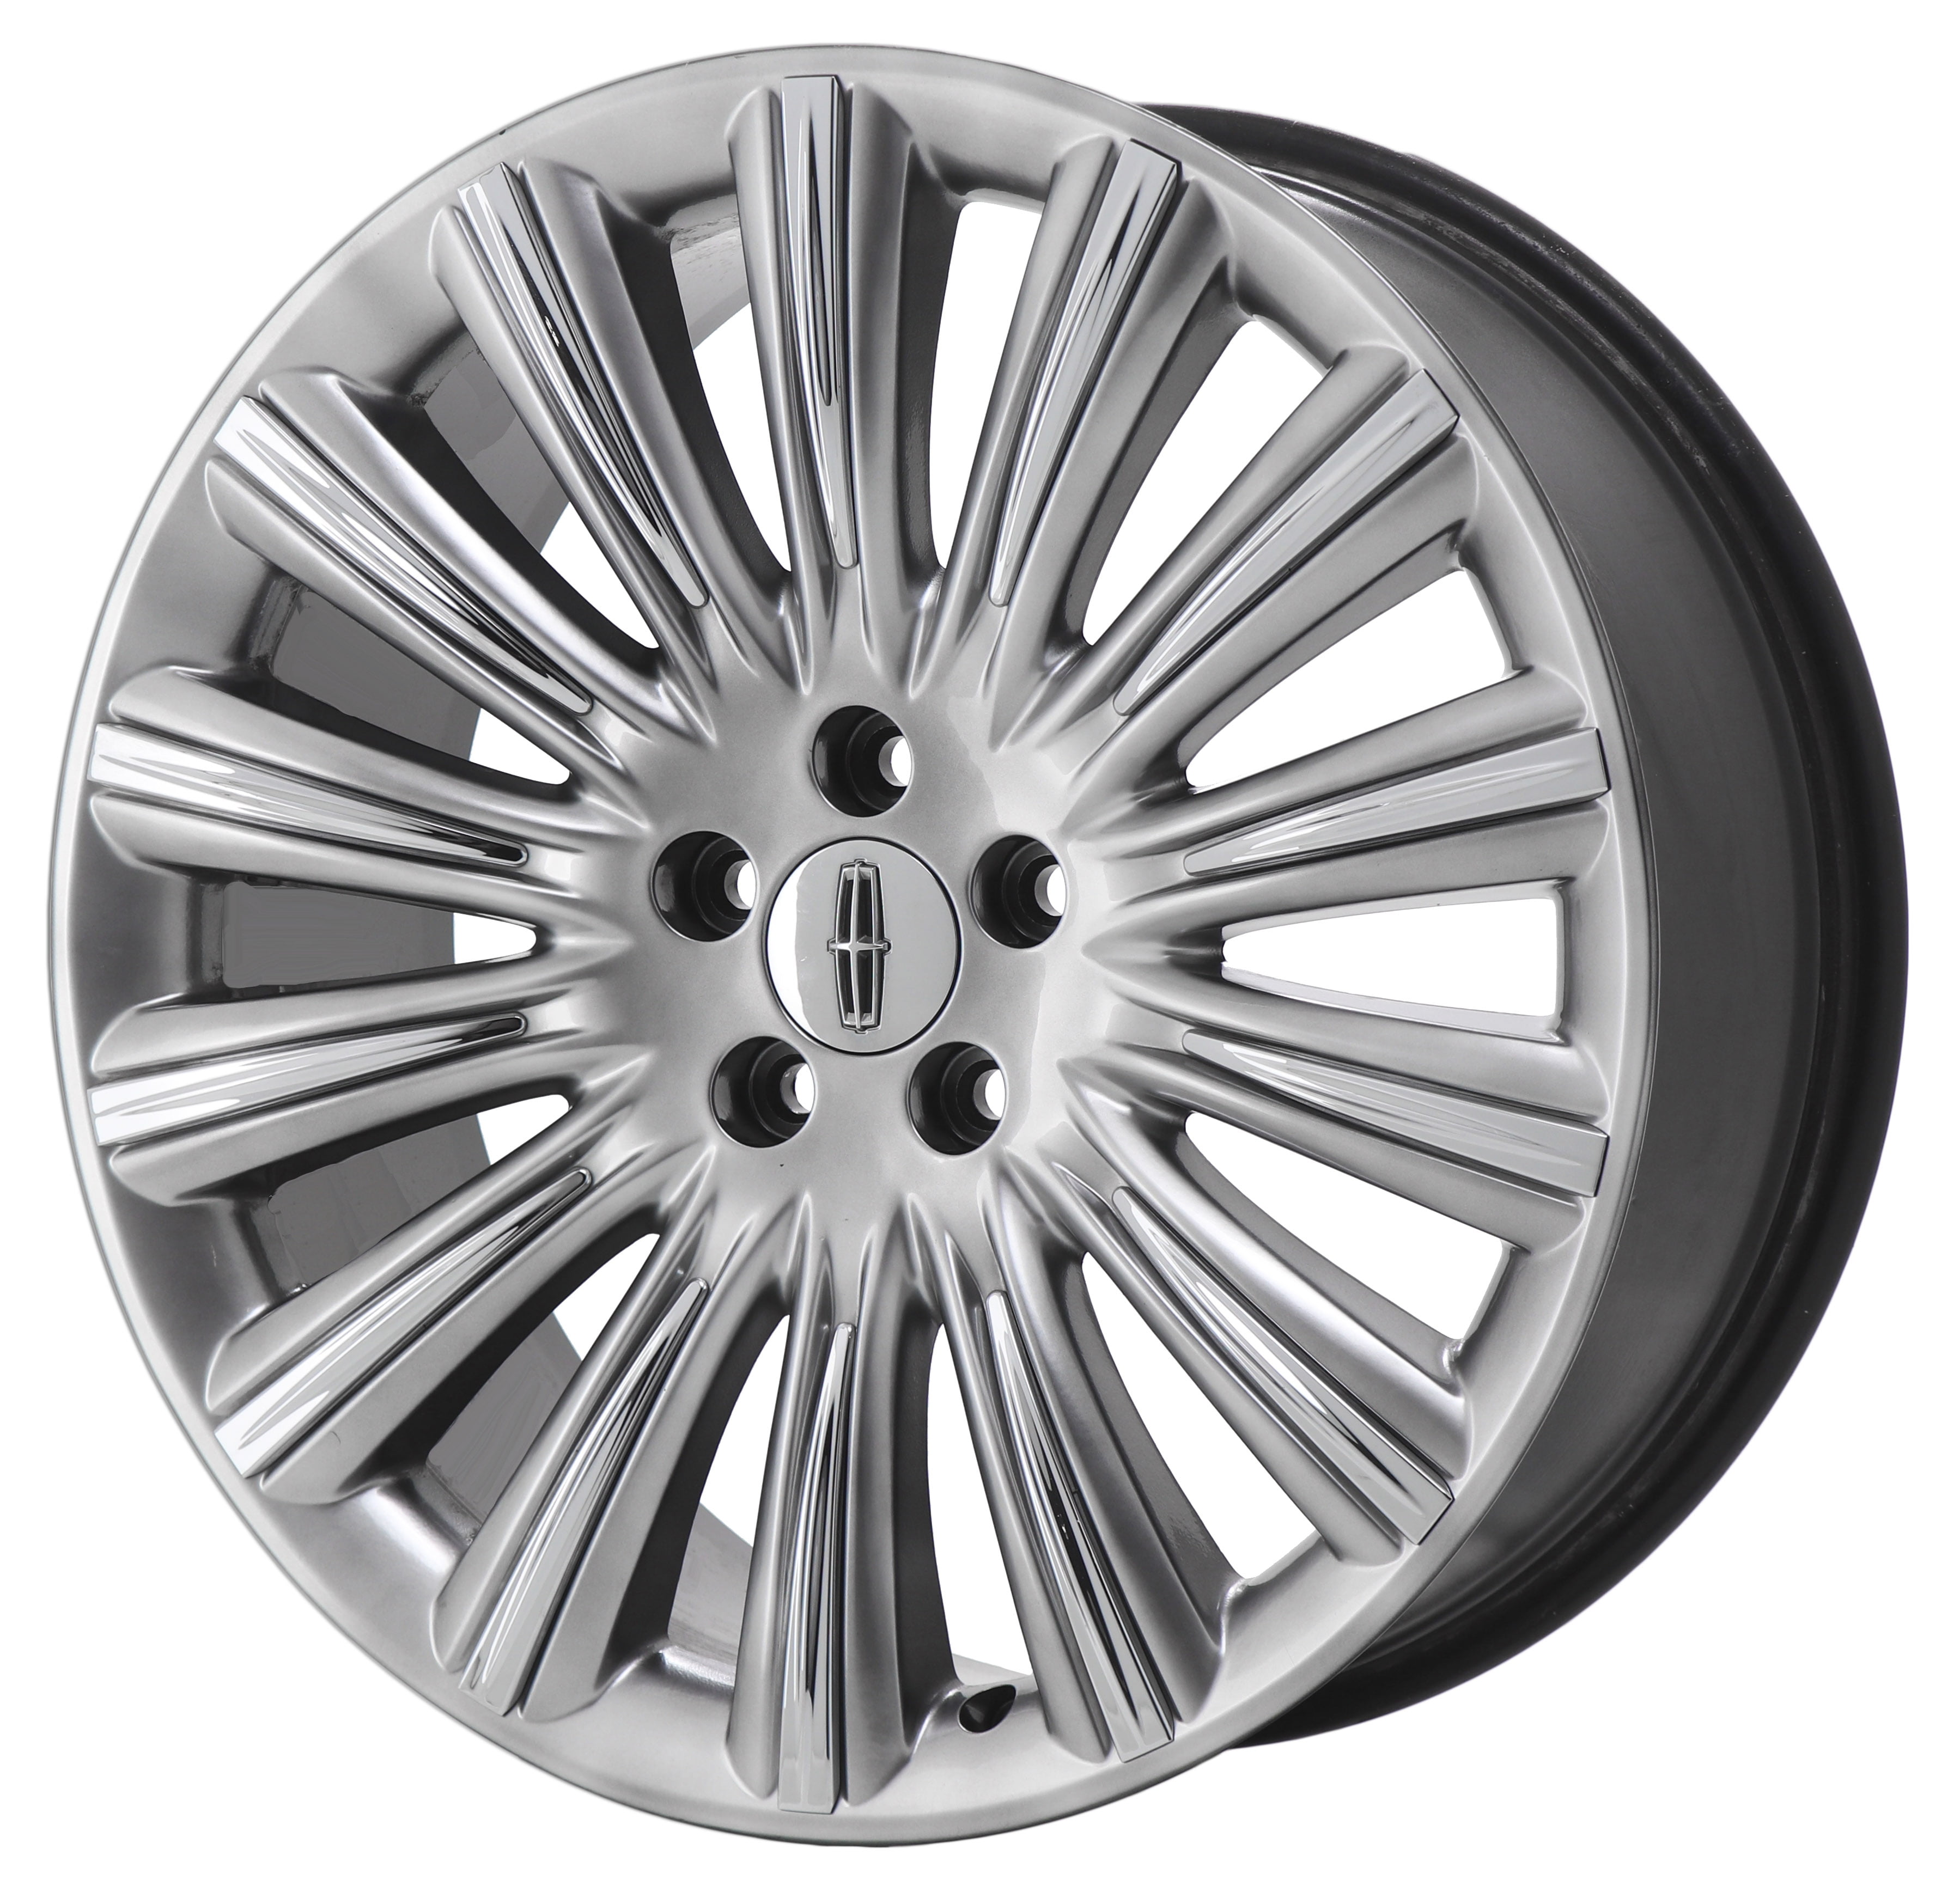 Lincoln Mks 2013 2016 Hyper Silver Factory Oem Wheel Rim Not